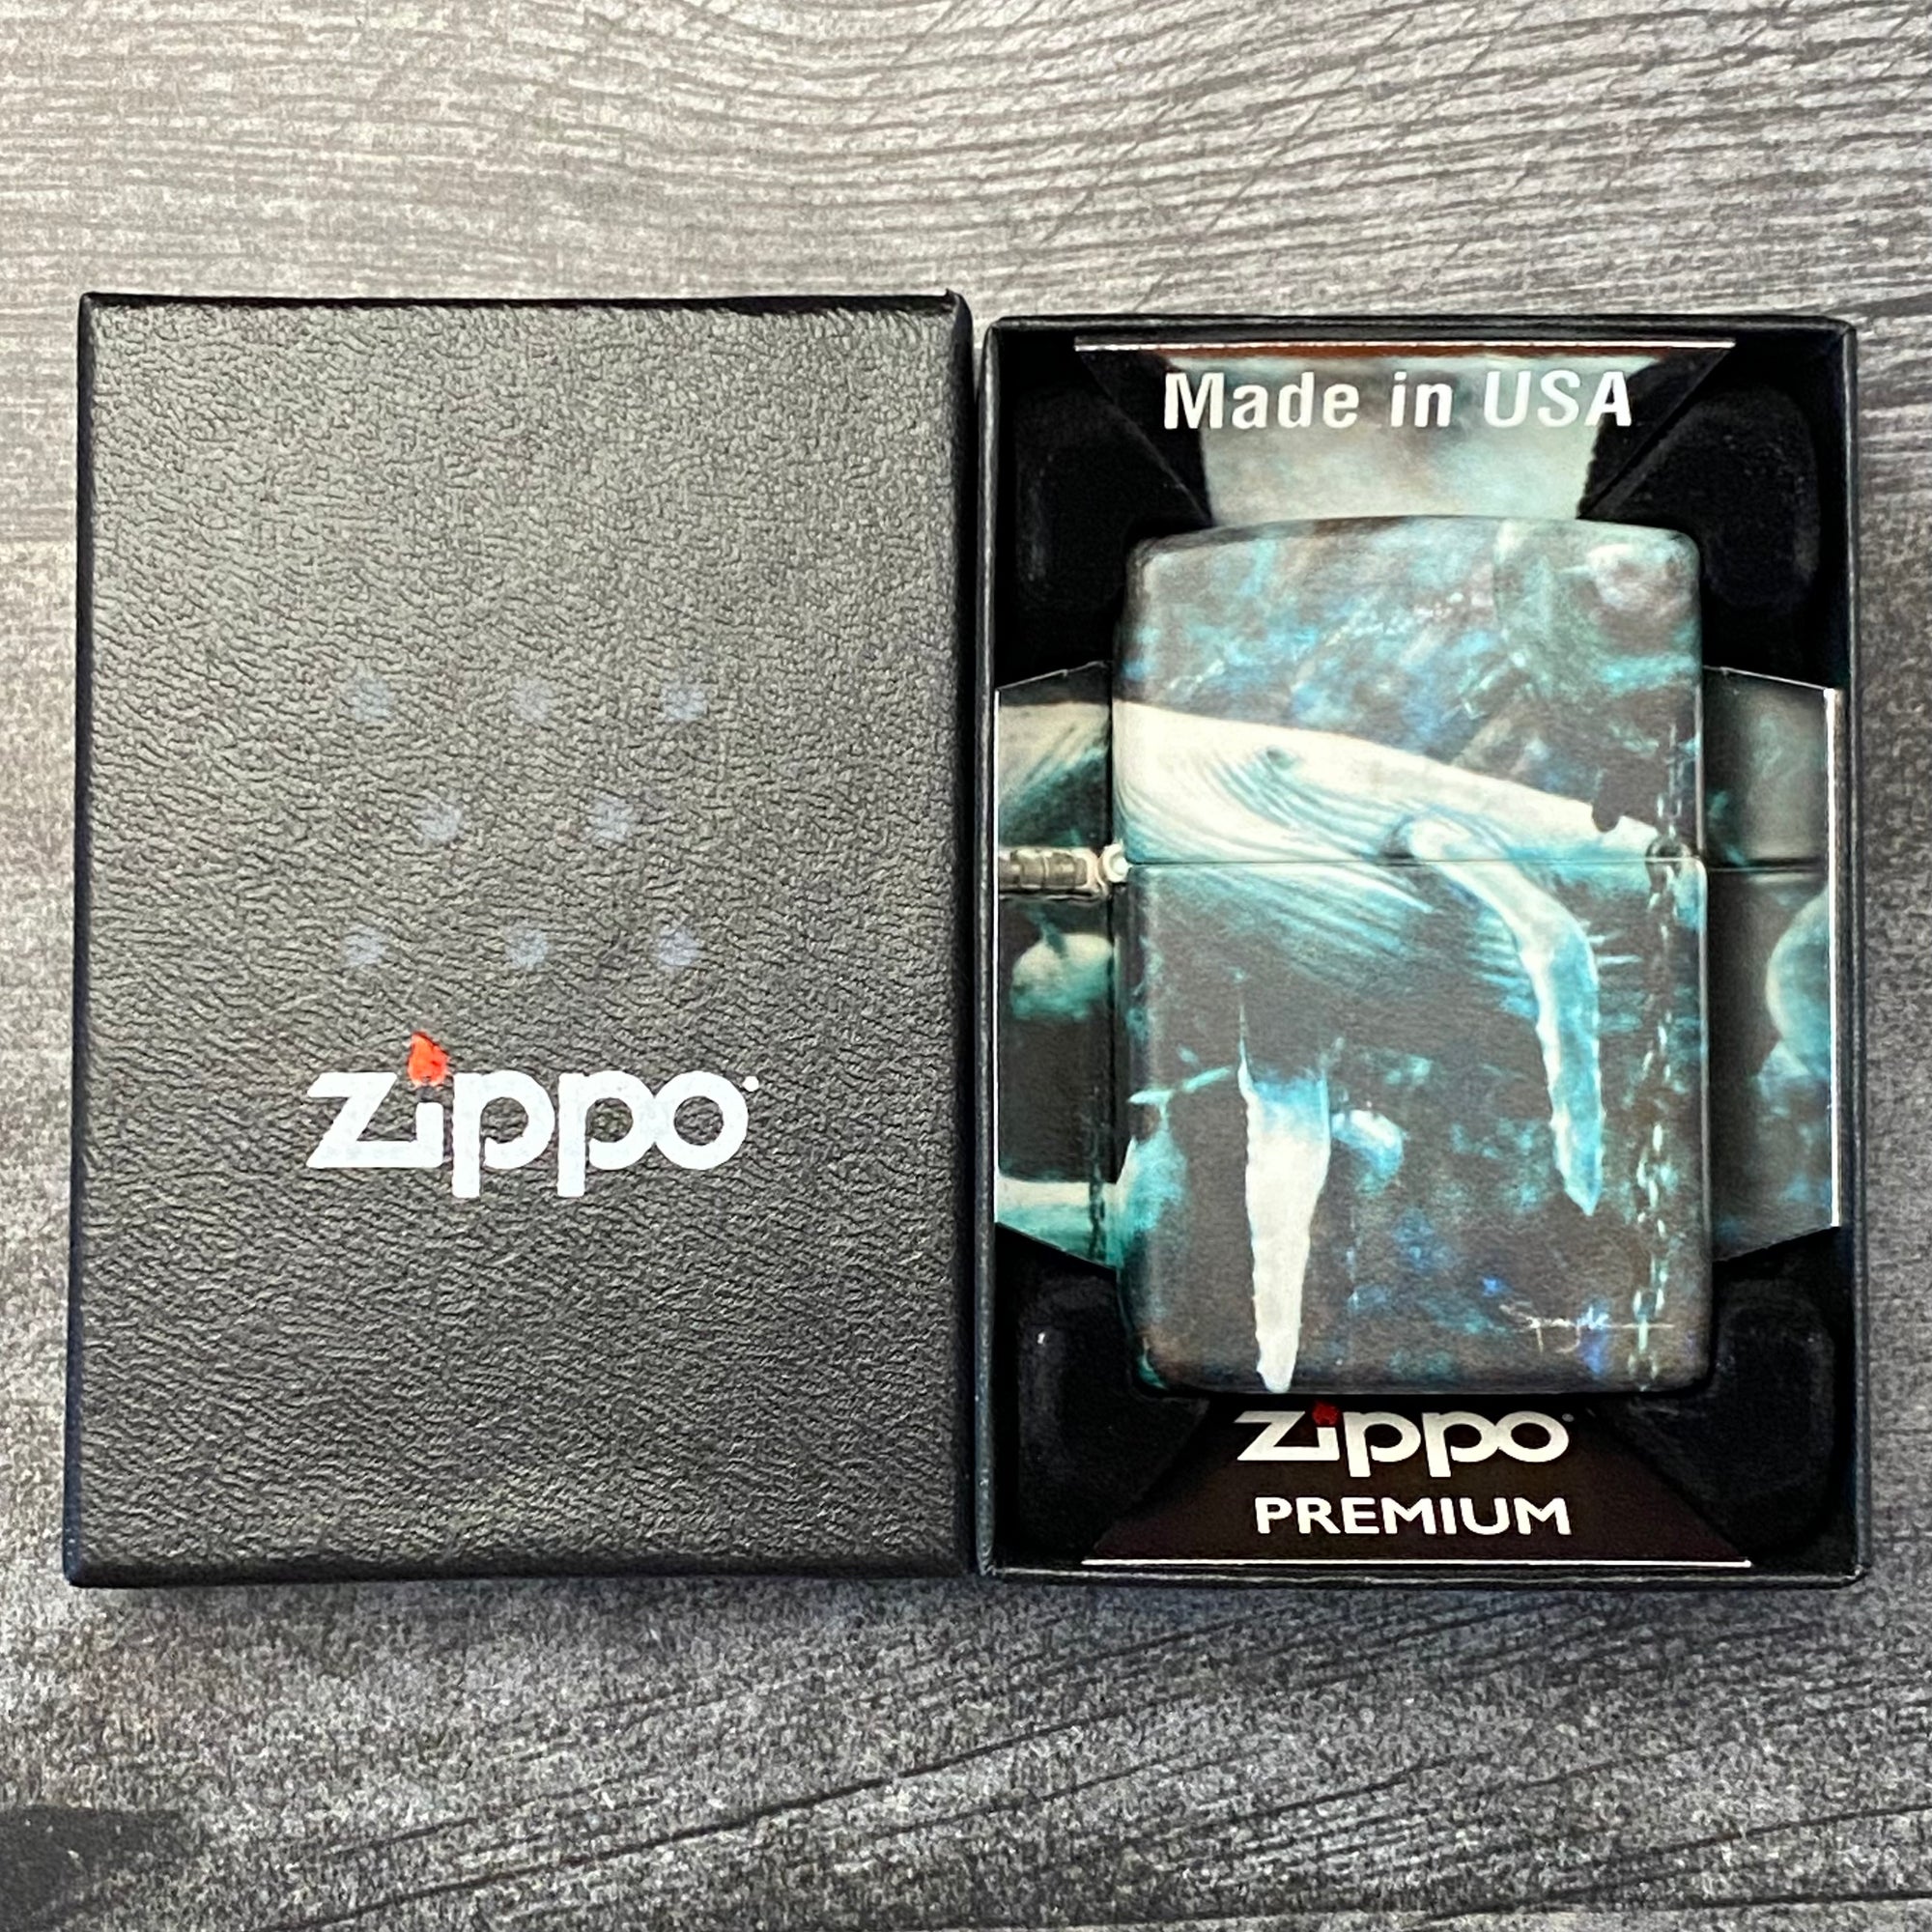 Zippo Lighter - Spazuk Whales - 540 Color